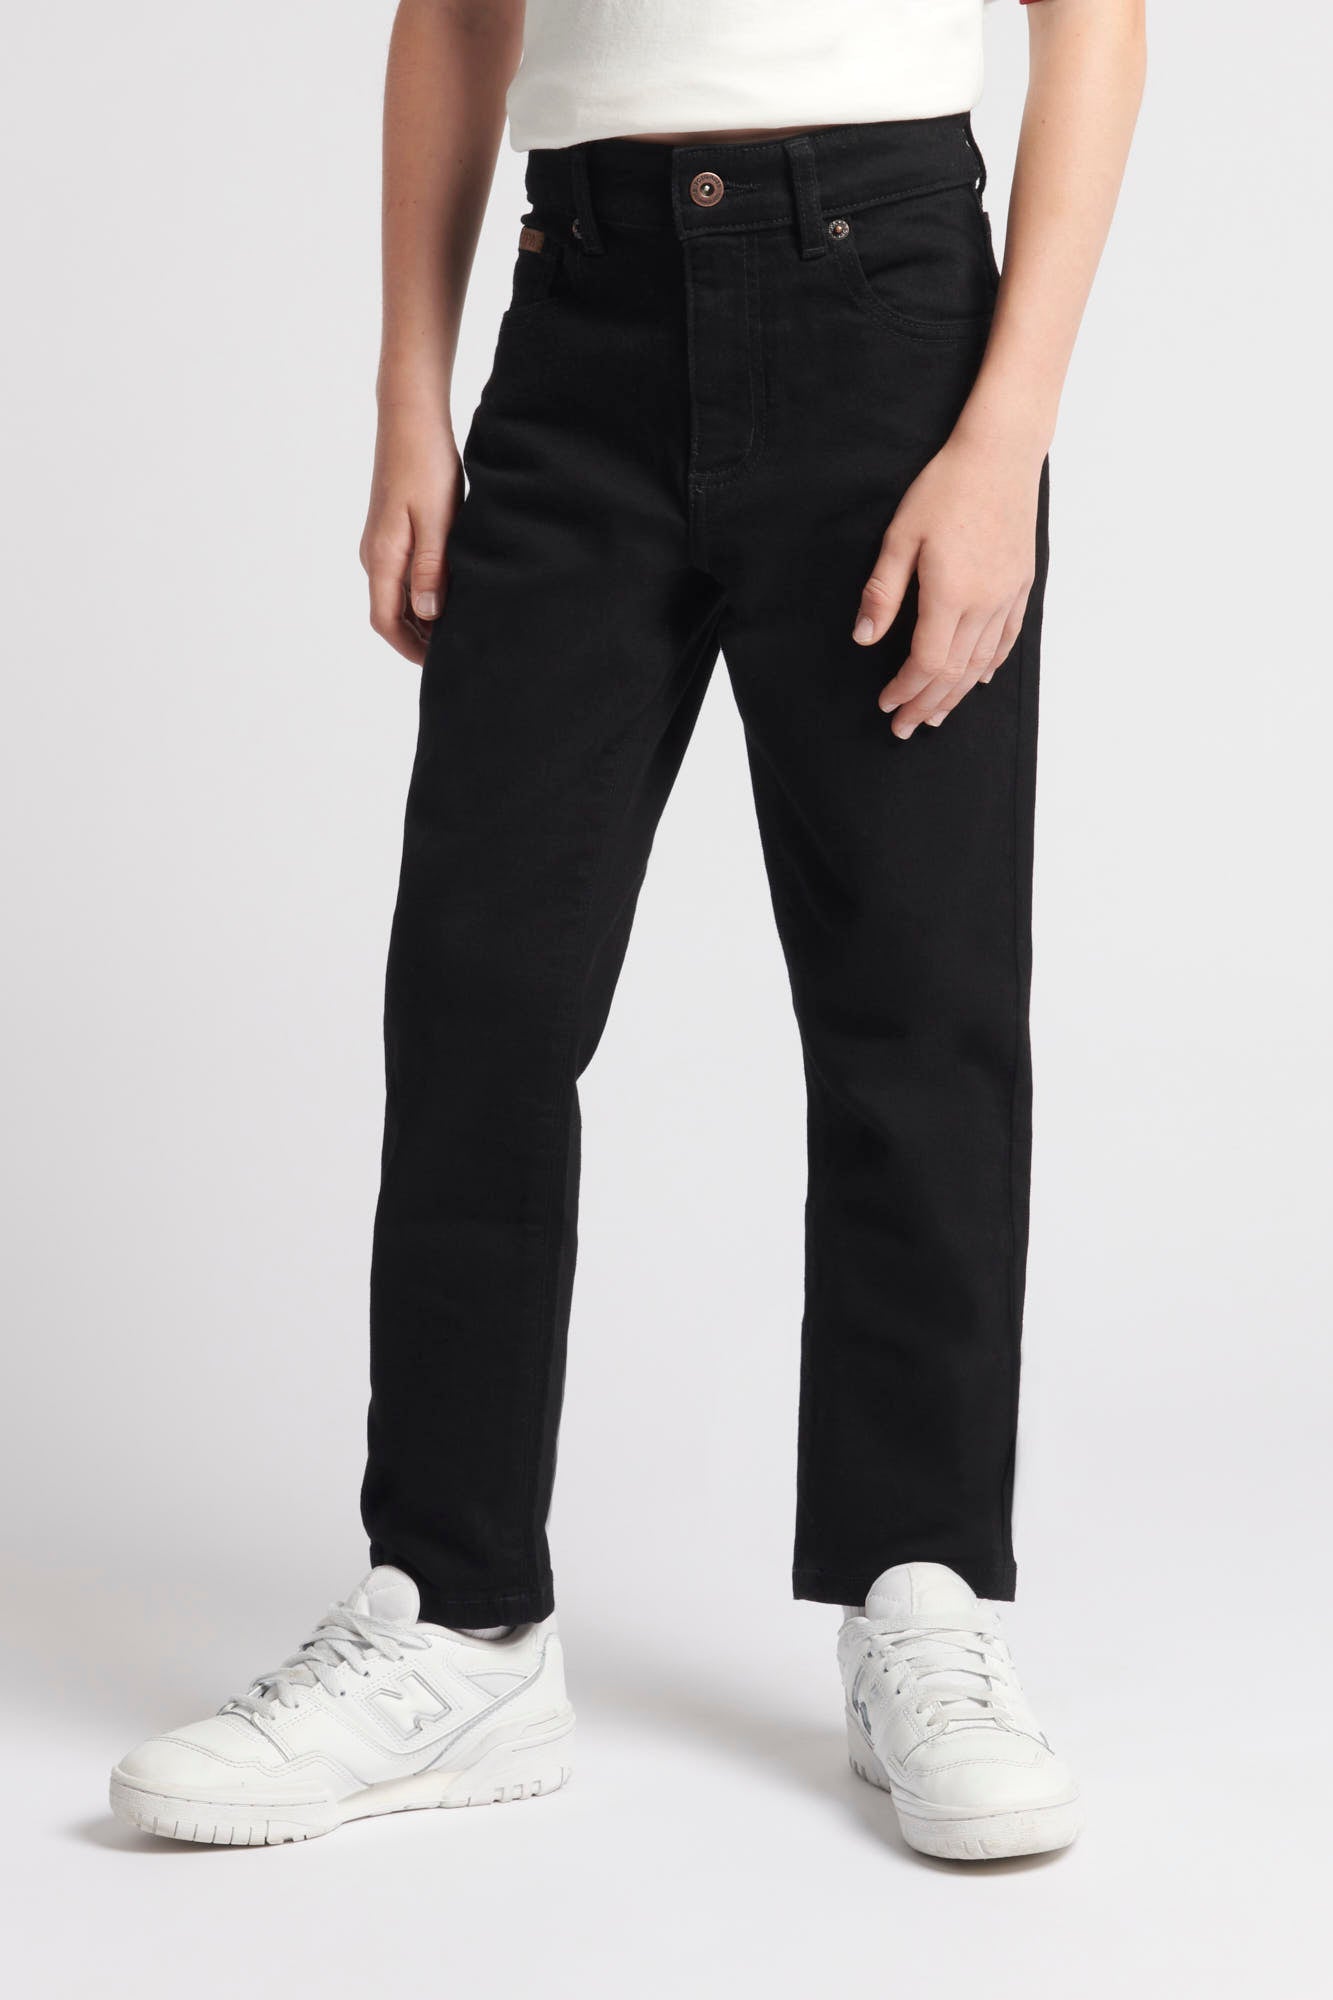 U.S. Polo Assn. Boys 5 Pocket Slim Fit Denim Jeans in Black Wash